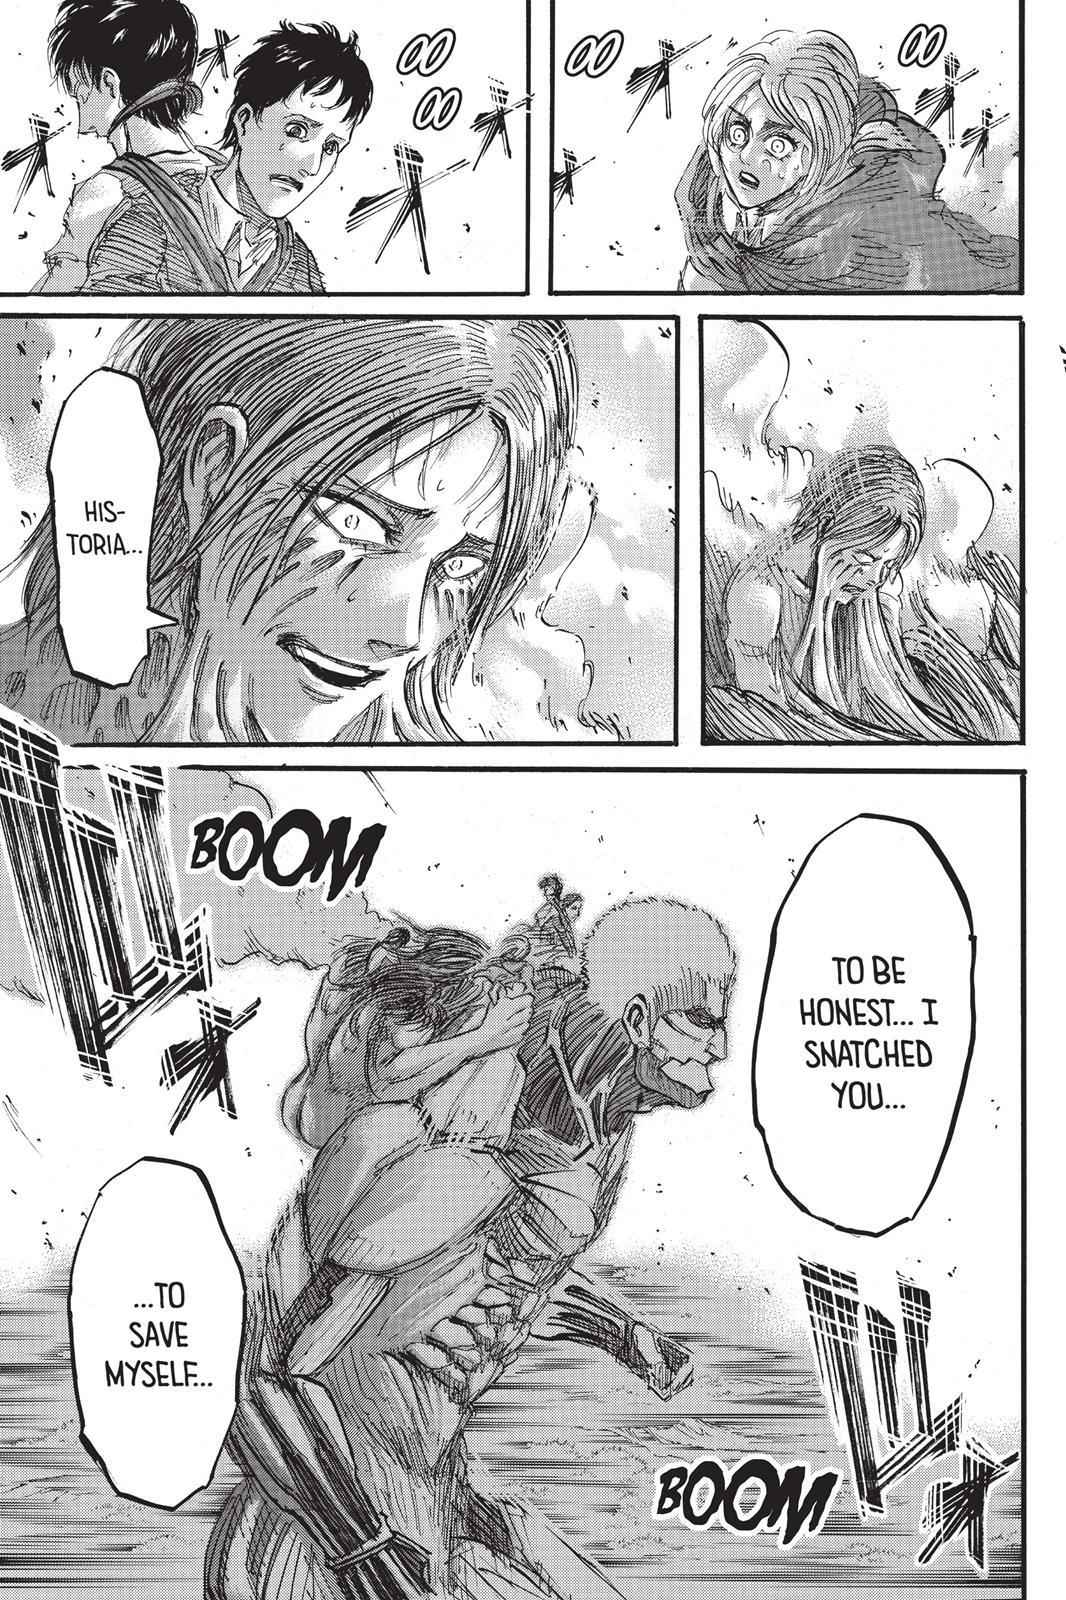 Shingeki No Kyojin, chapter 48 - Attack On Titan Manga Online